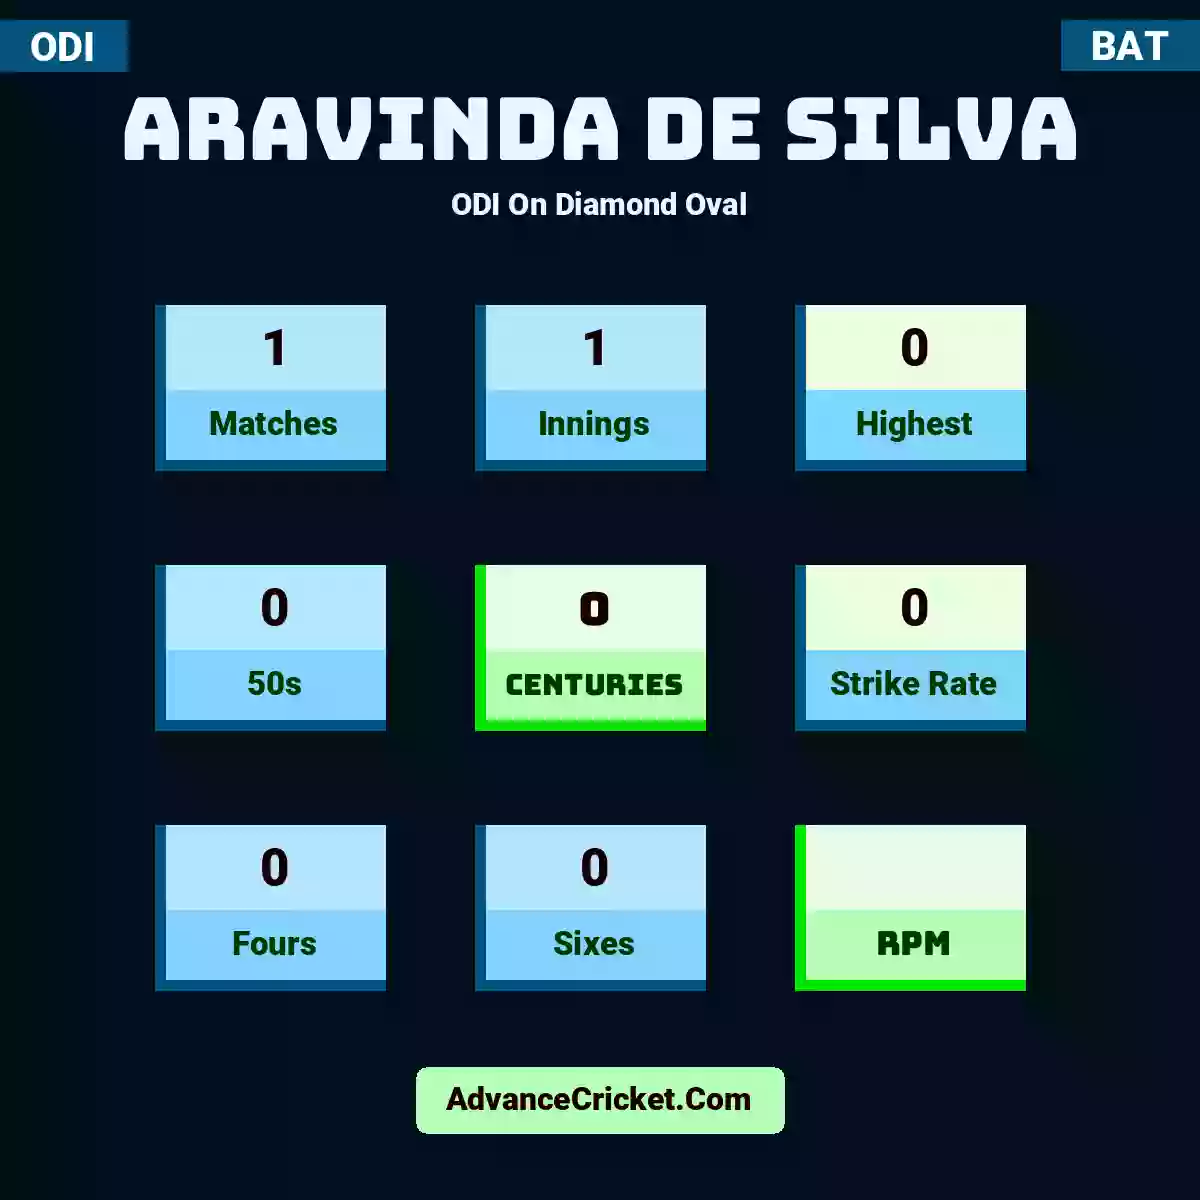 Aravinda de Silva ODI  On Diamond Oval, Aravinda de Silva played 1 matches, scored 0 runs as highest, 0 half-centuries, and 0 centuries, with a strike rate of 0. A.Silva hit 0 fours and 0 sixes.